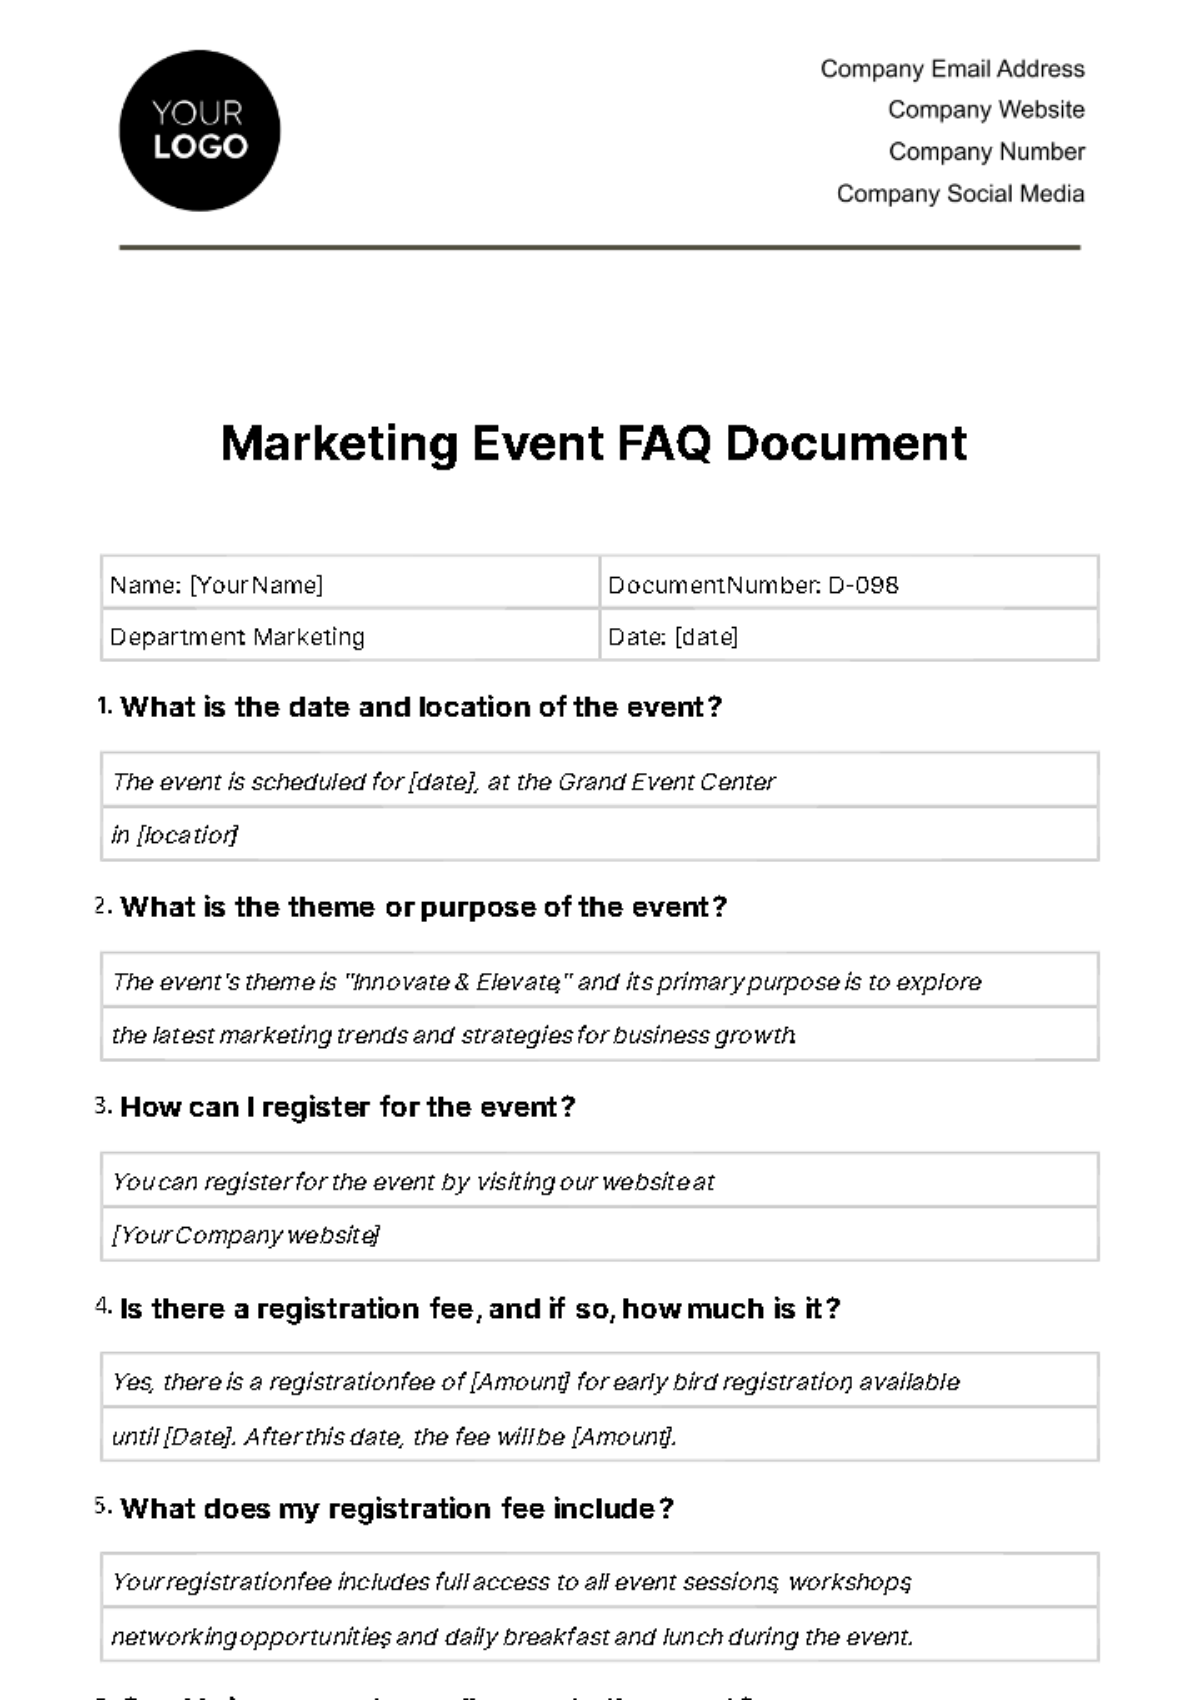 Free Marketing Event FAQ Document Template